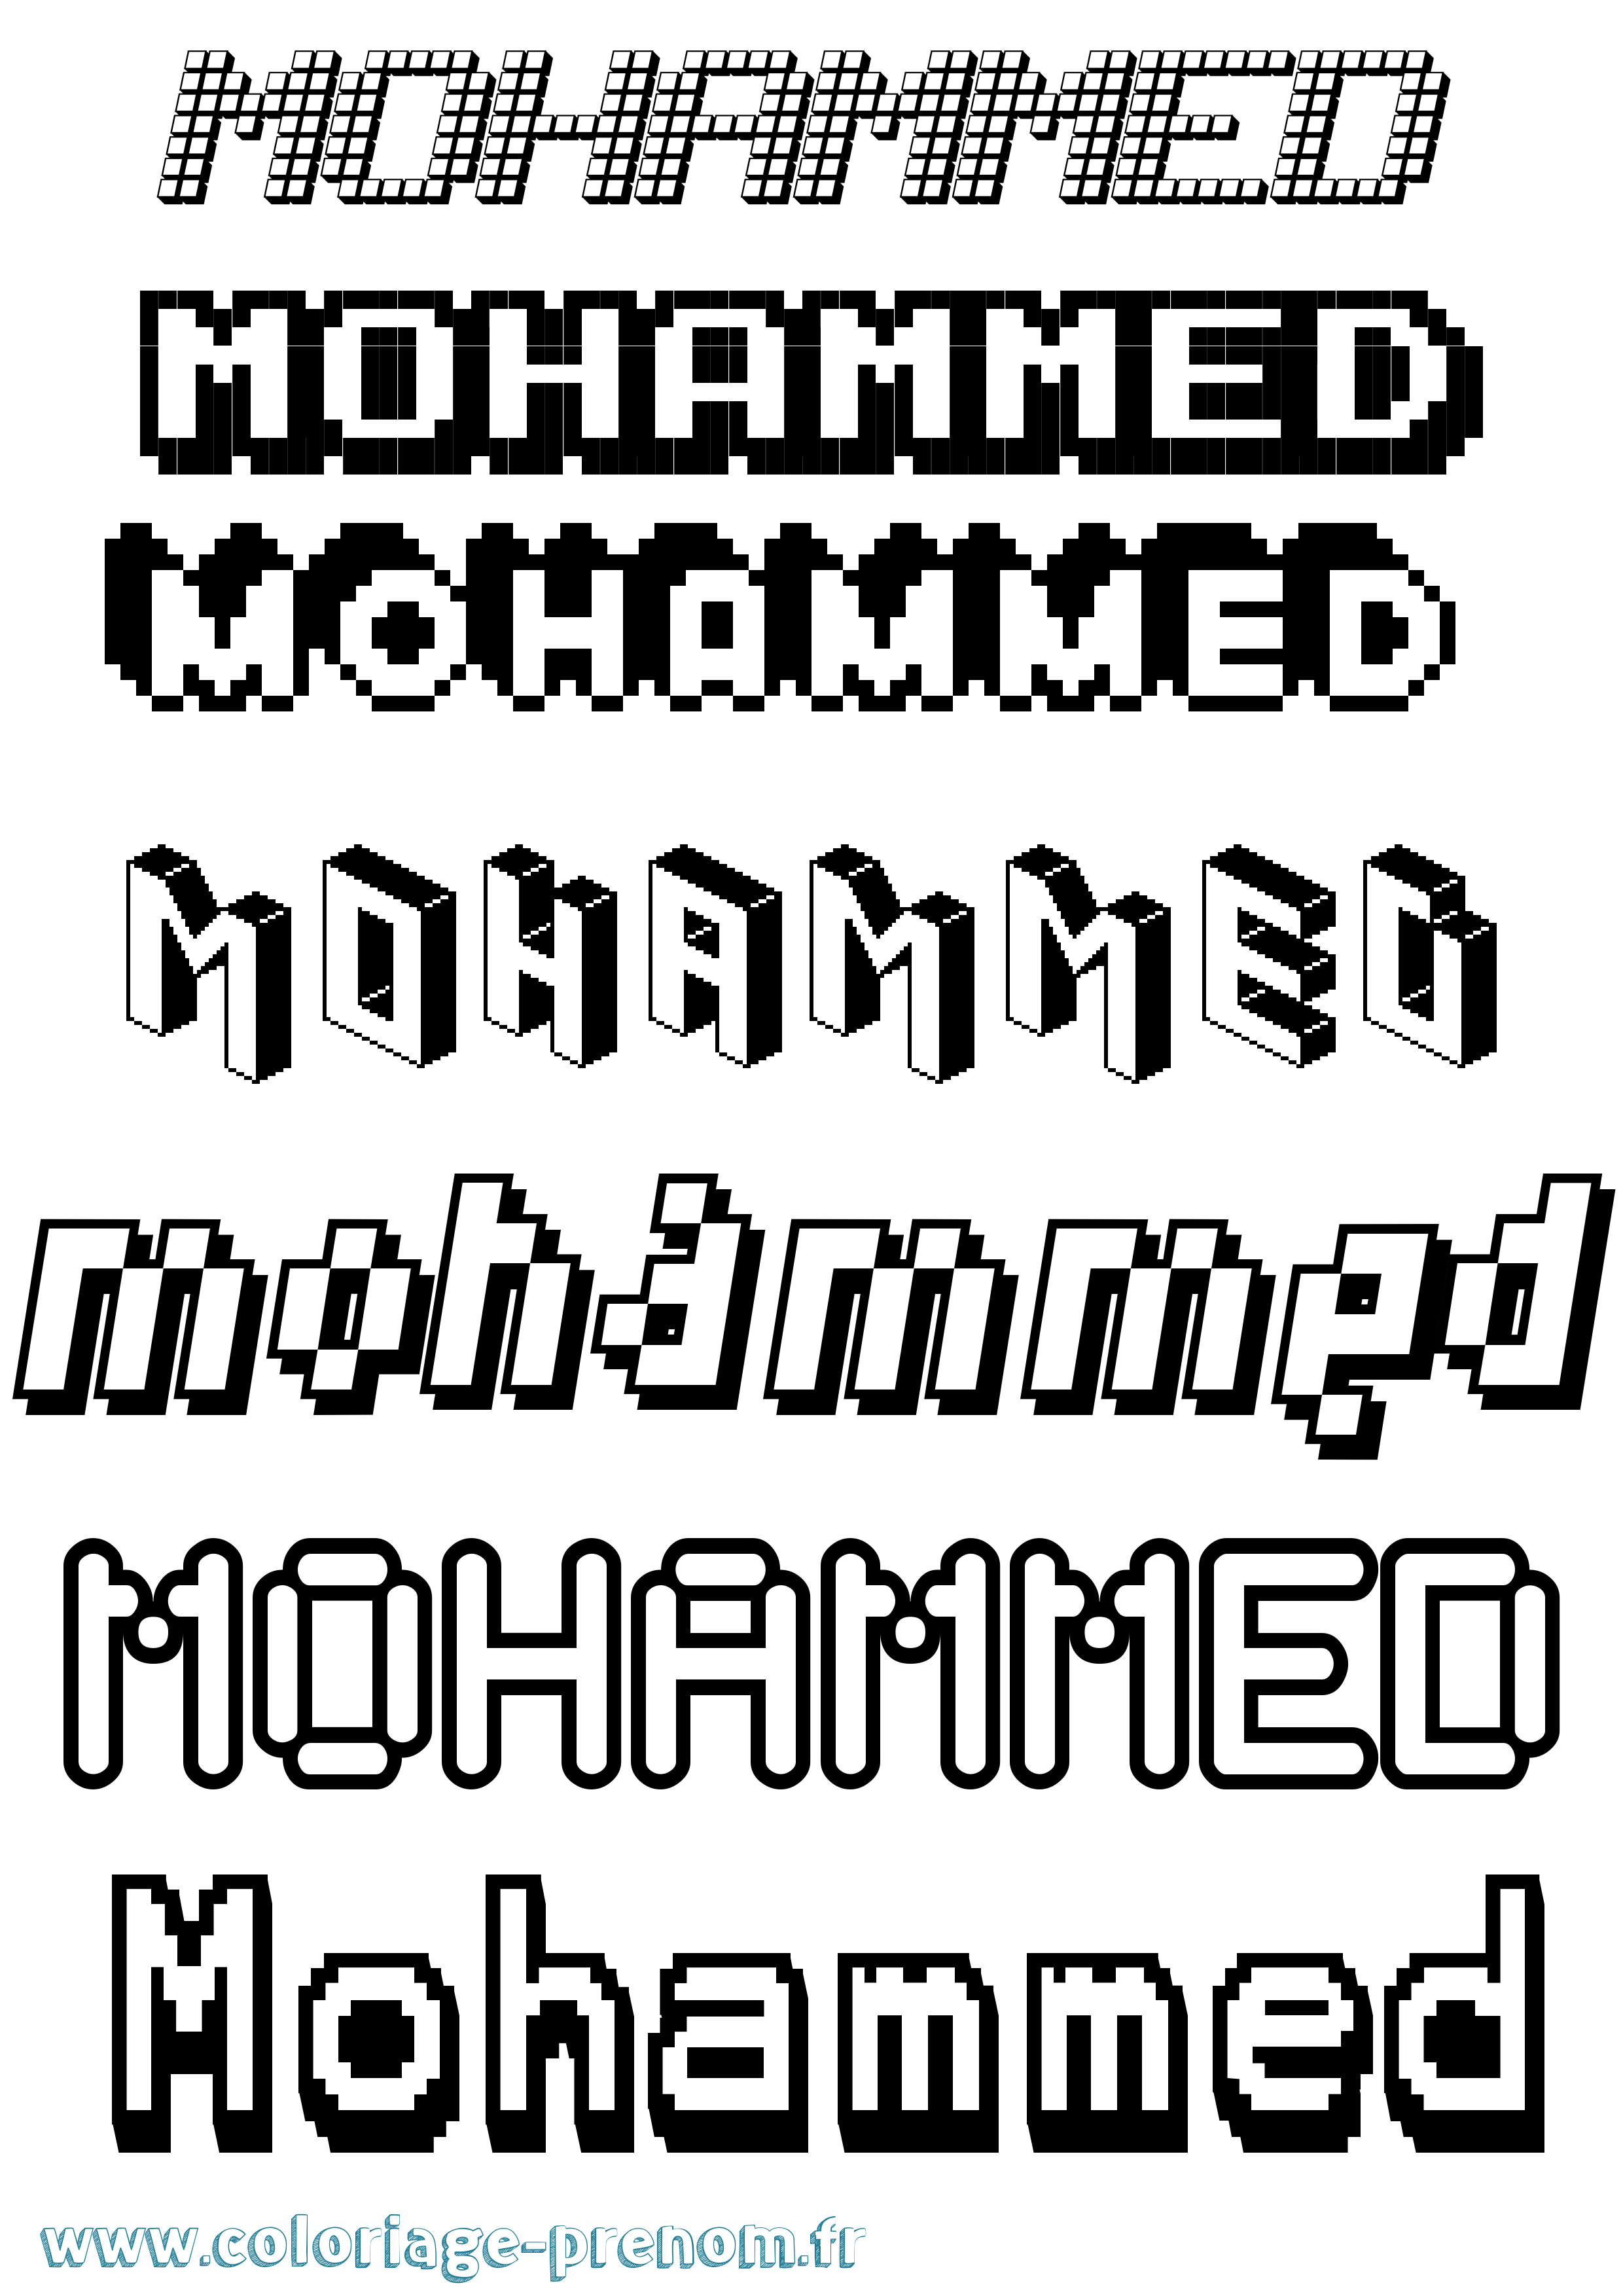 Coloriage prénom Mohammed